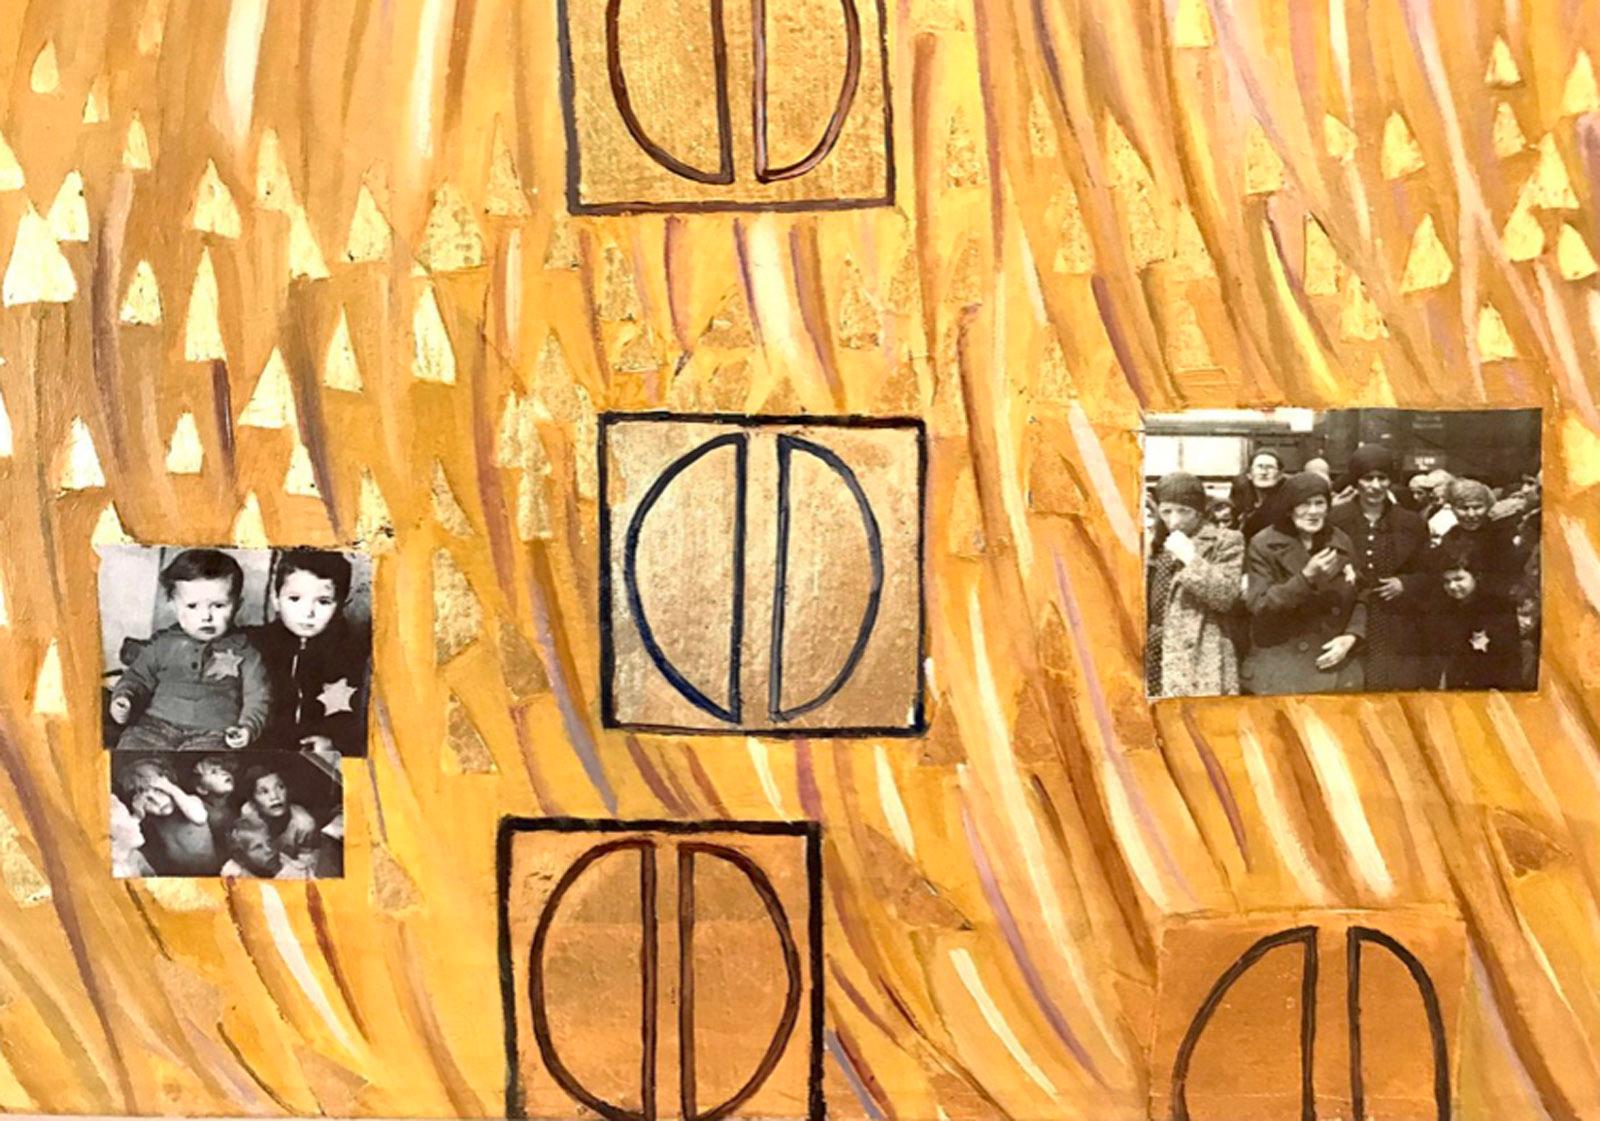 Gold & Despair is my adaptation of Gustav Klimt’s masterpiece 